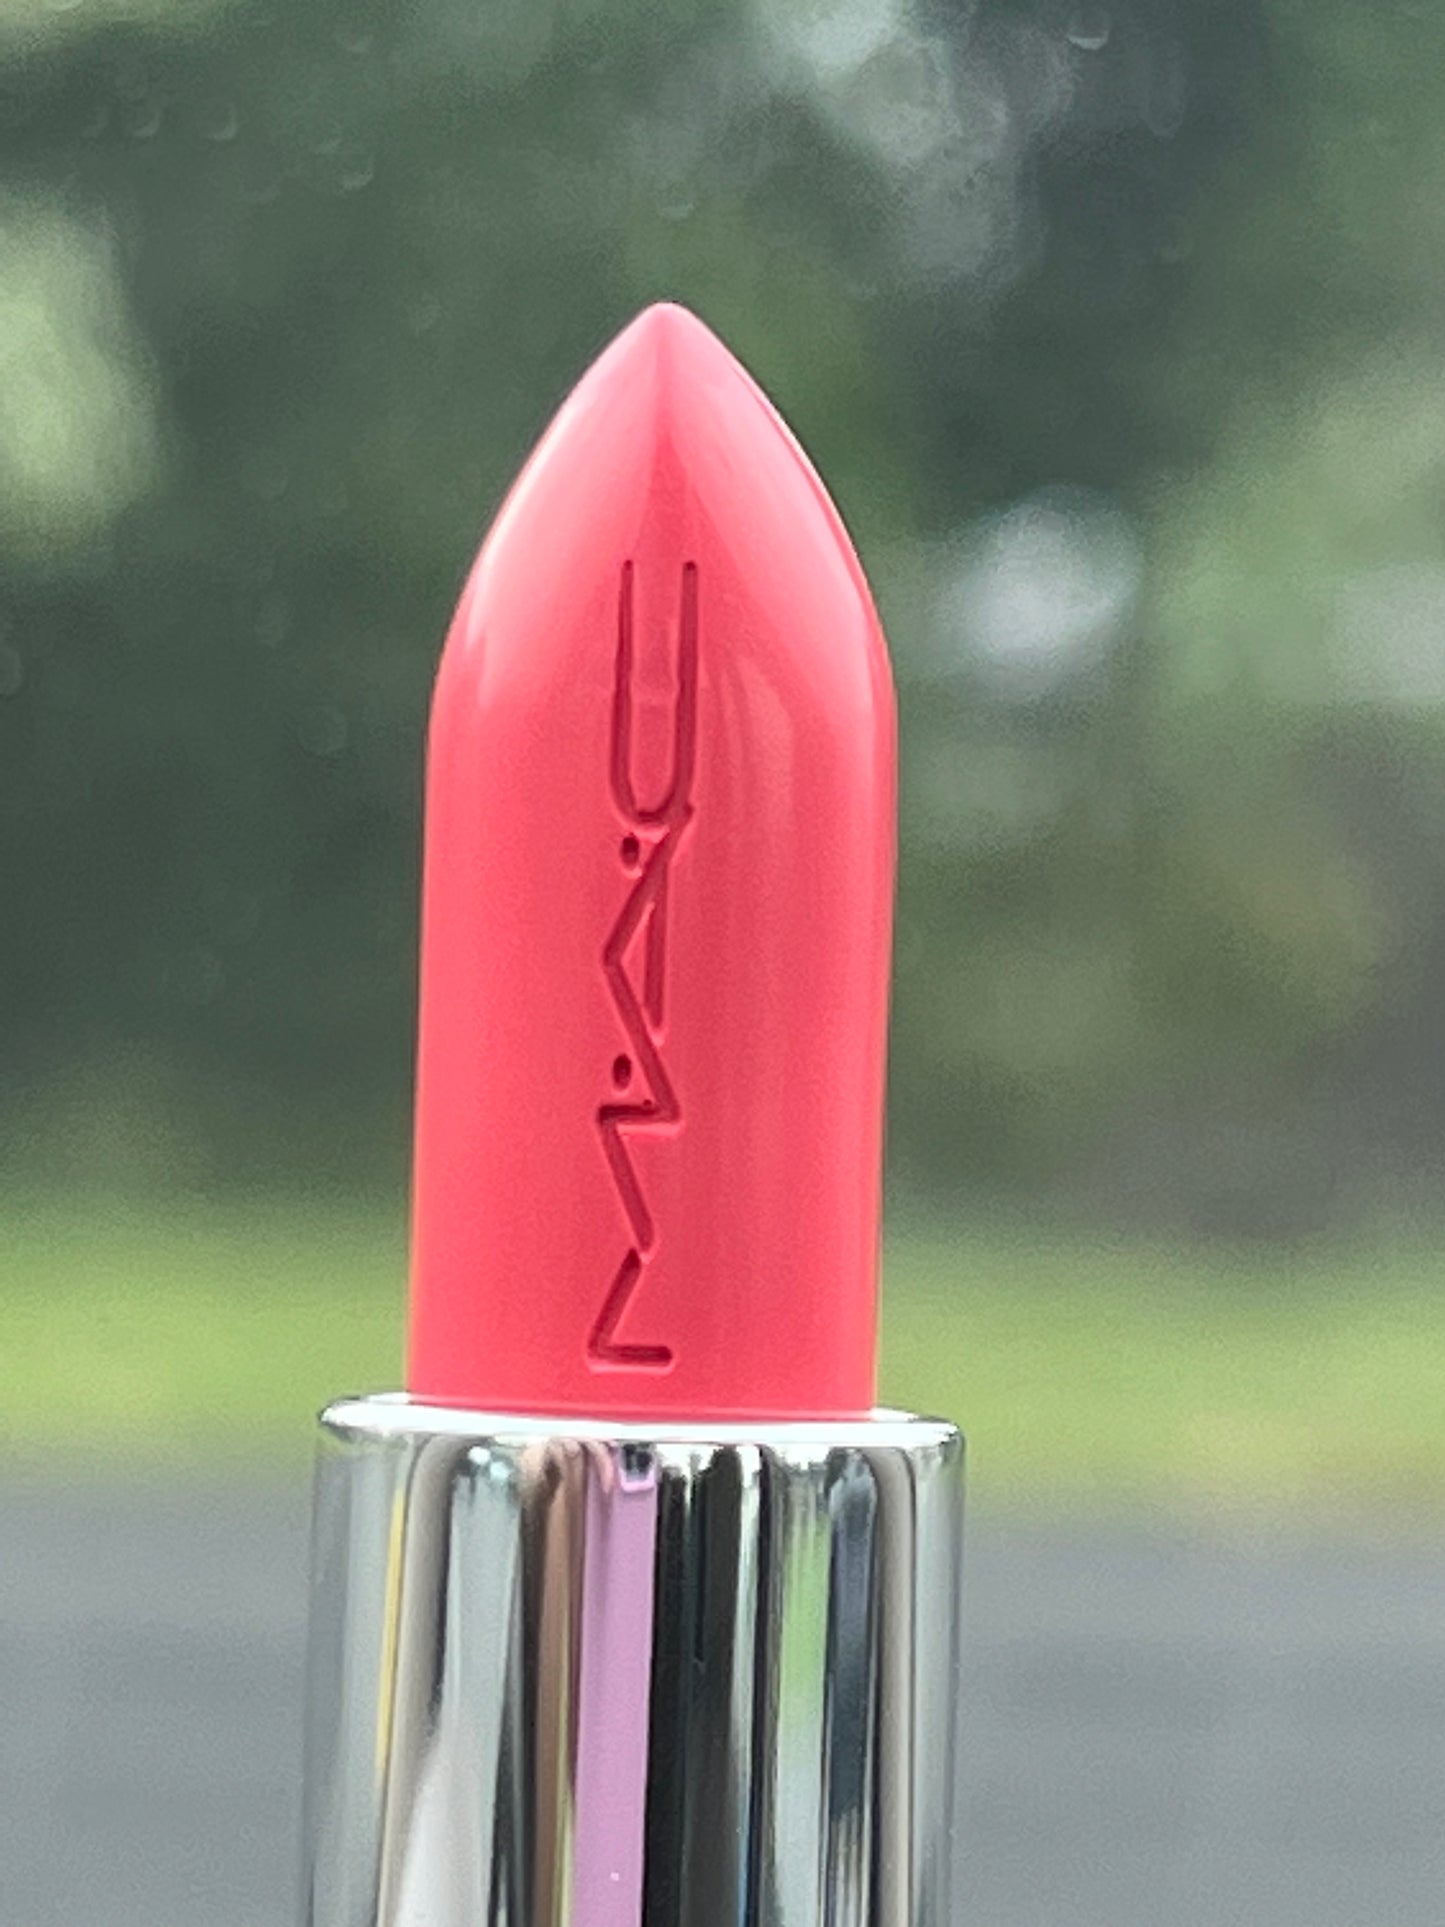 MAC Lustreglass Lipstick in OH GOODIE